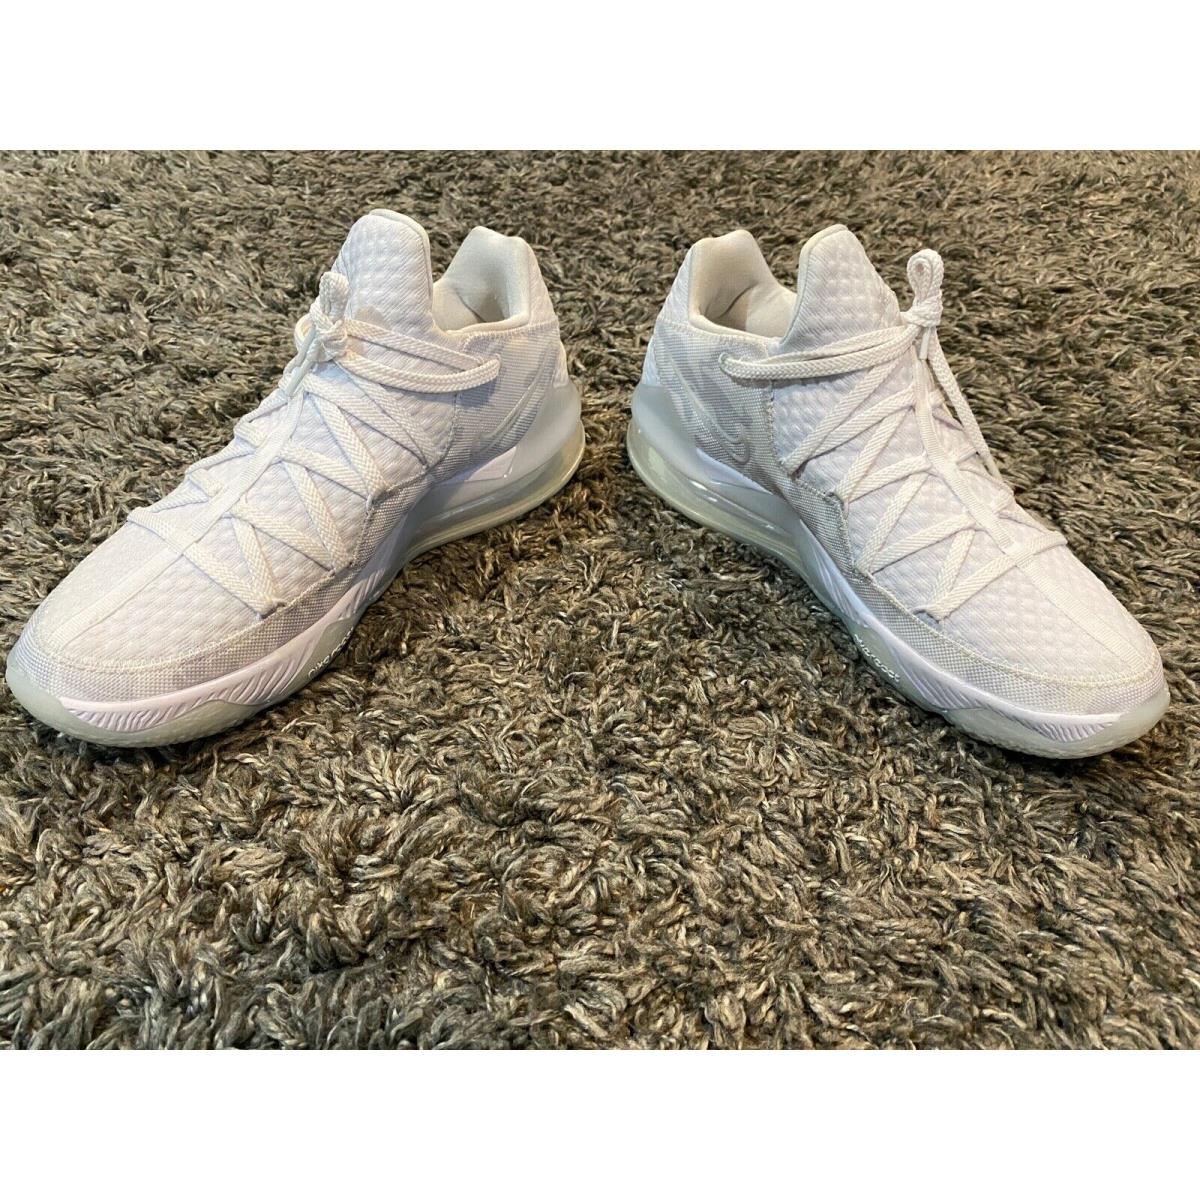 Nike shoes LeBron - White 5